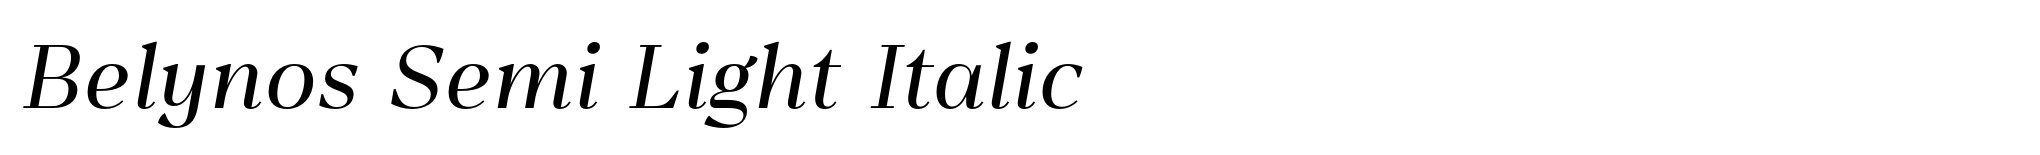 Belynos Semi Light Italic image